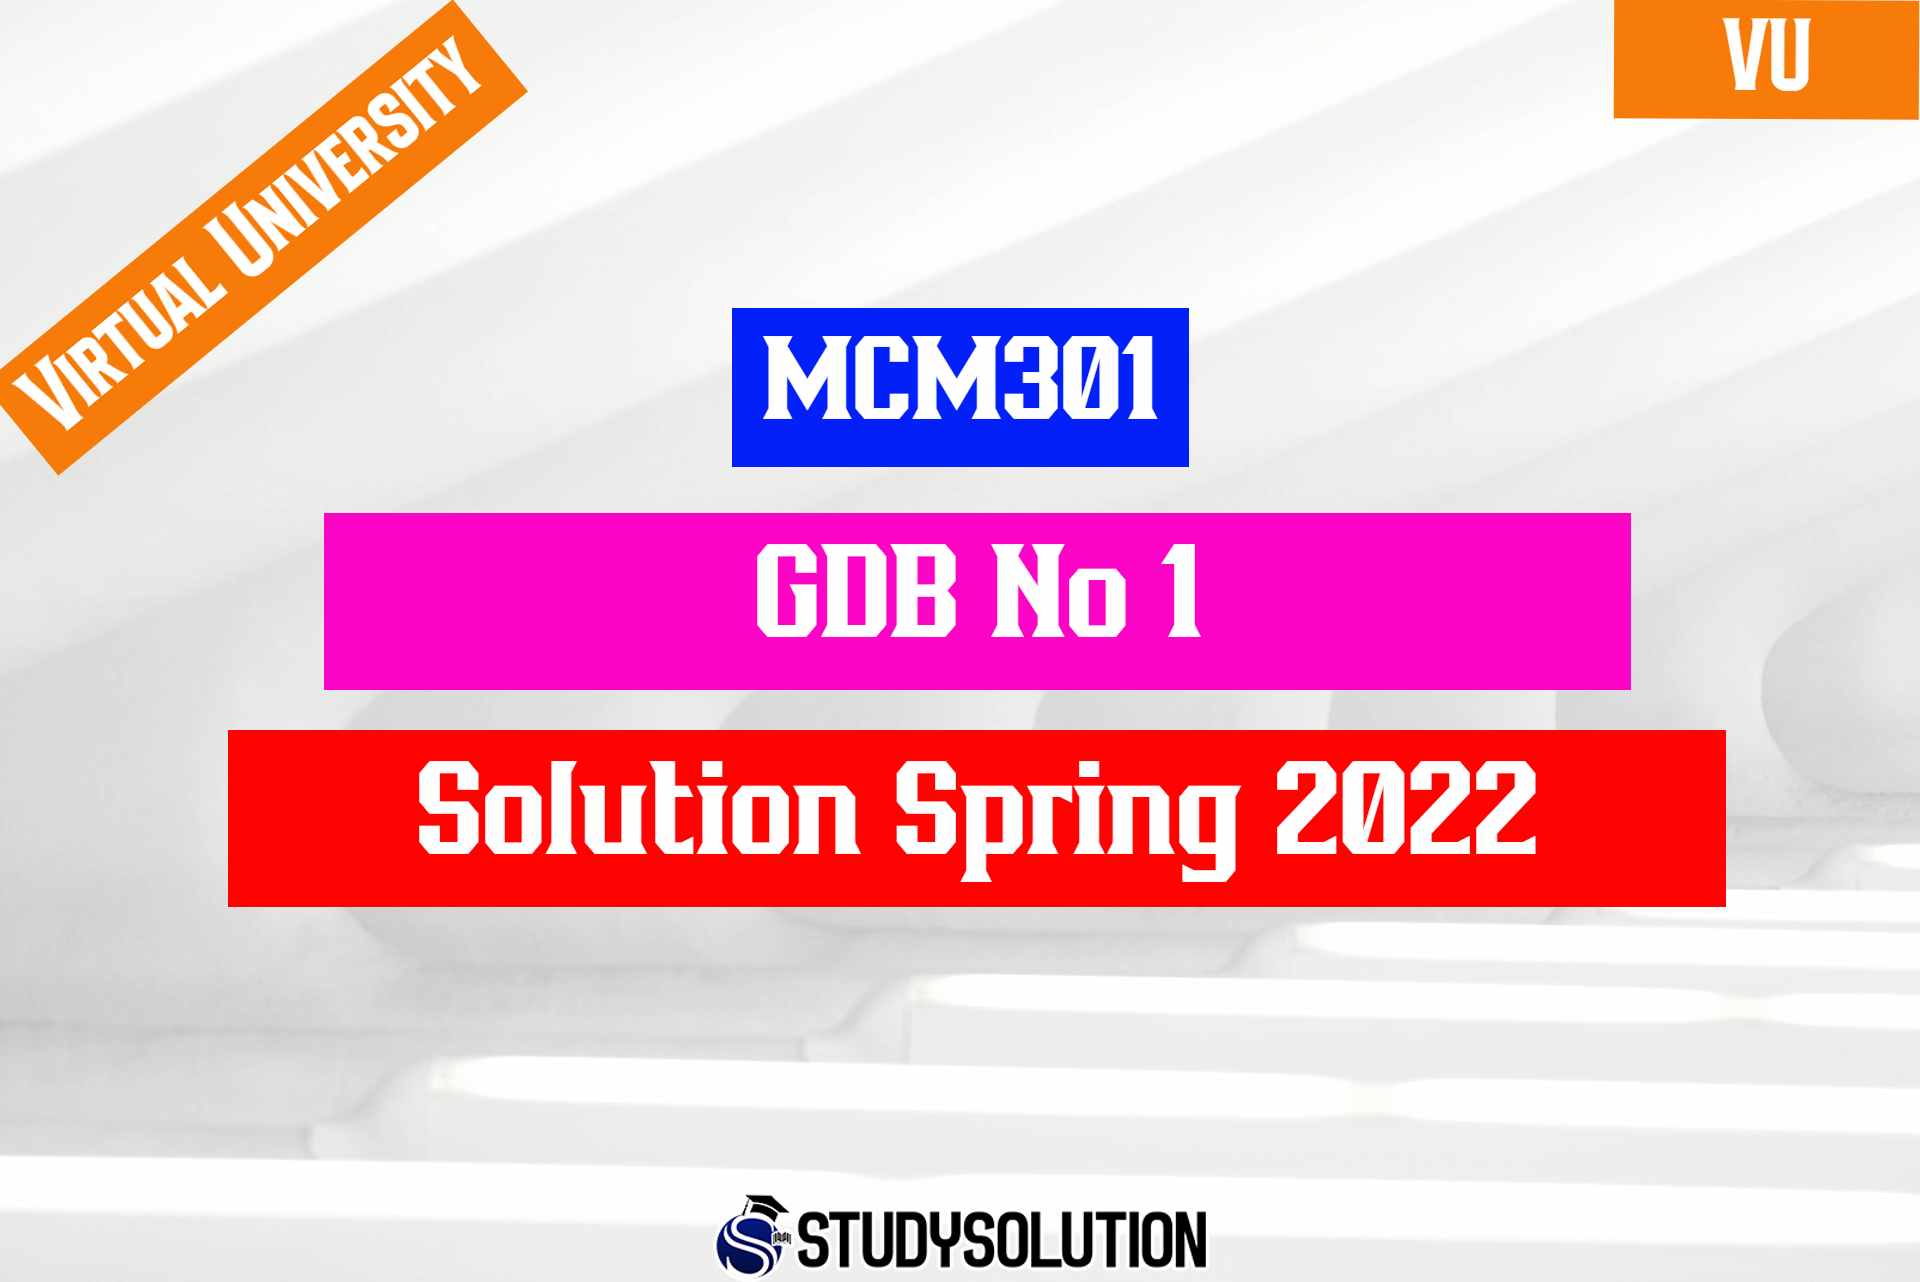 MCM301 GDB No 1 Solution Spring 2022